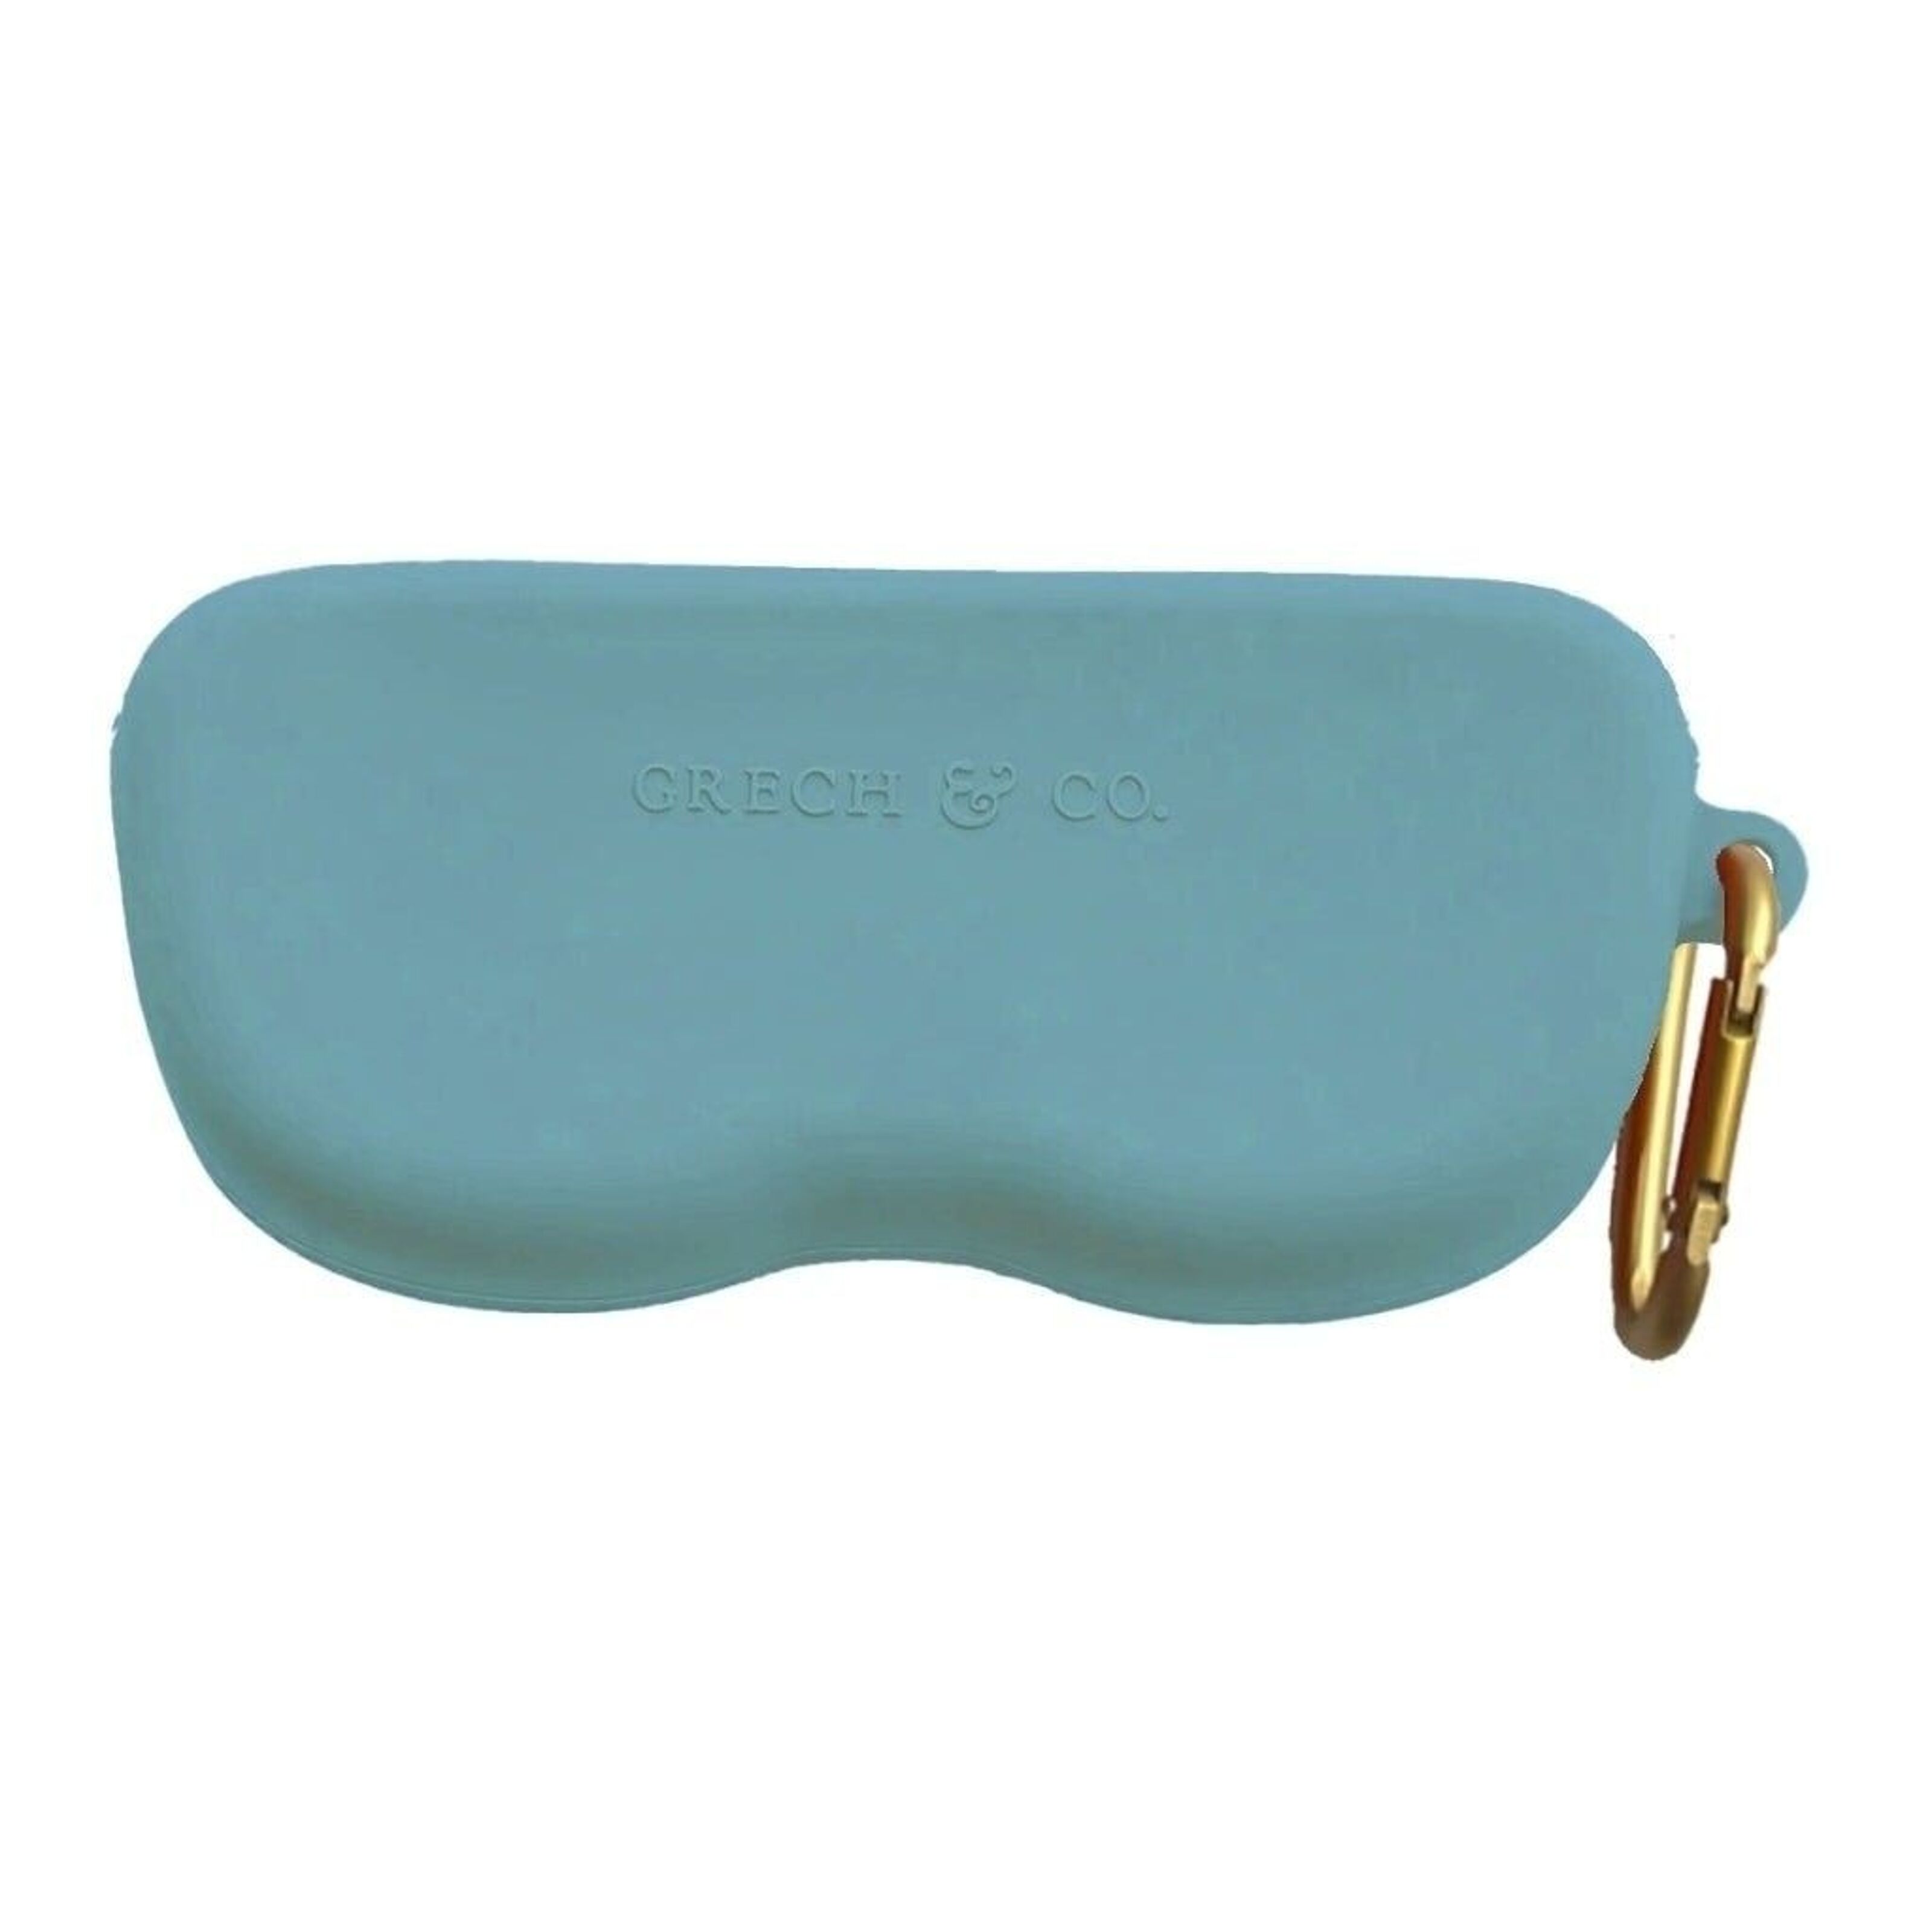 Buy wholesale Sunglasses Case - Laguna